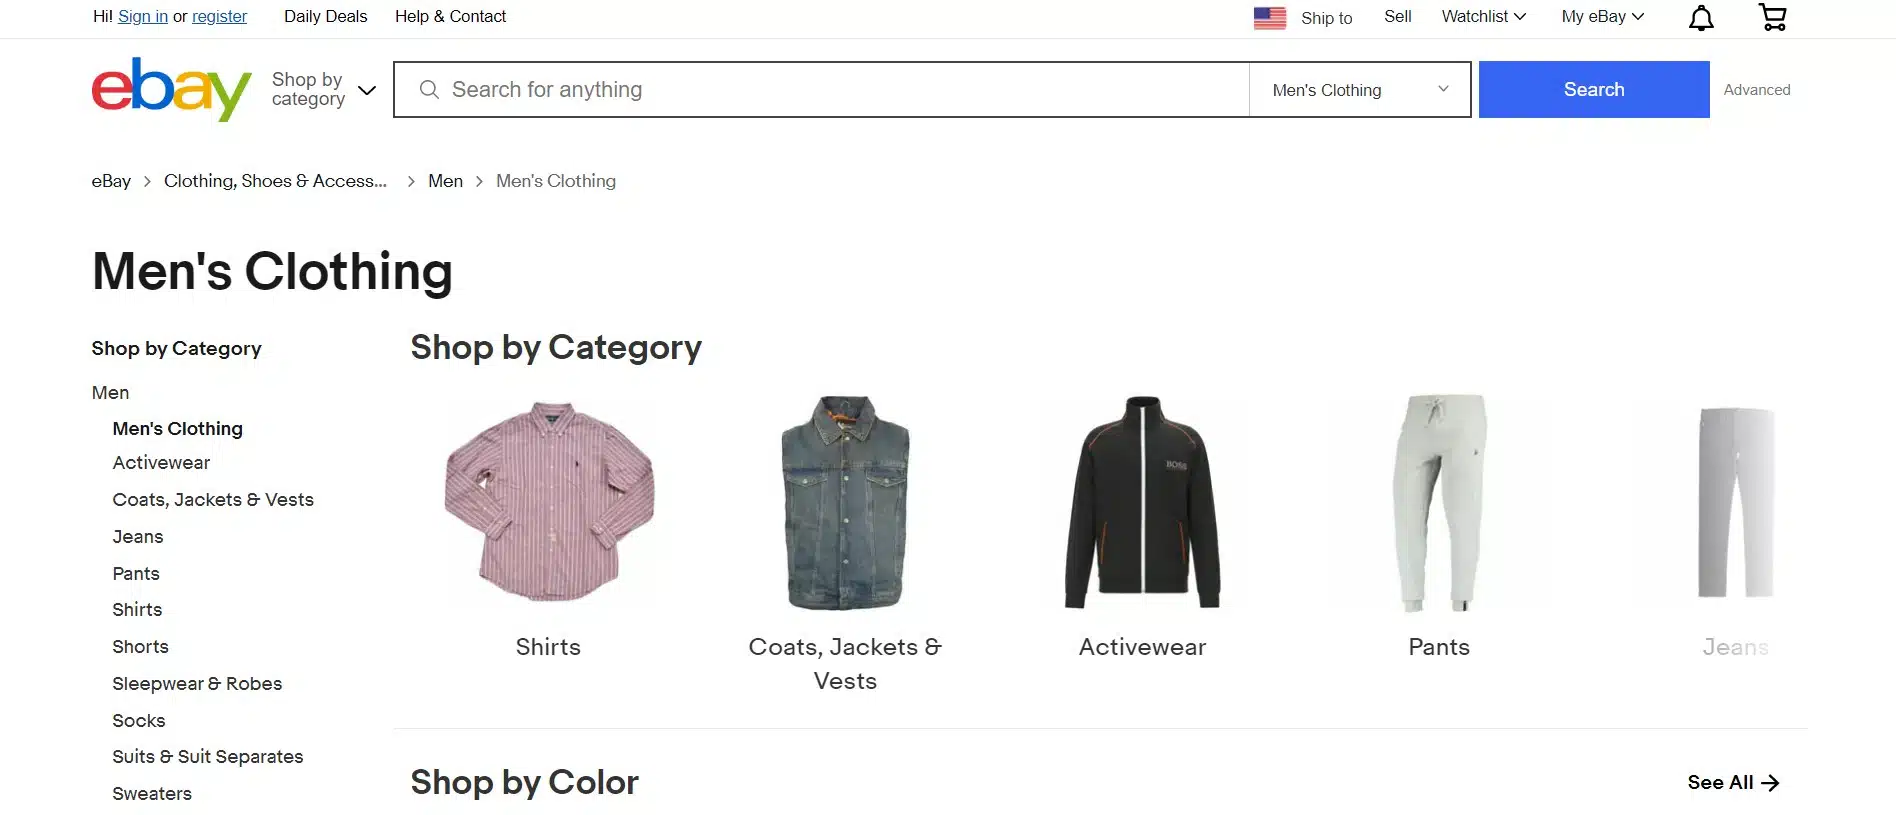 ebay mens clothing page